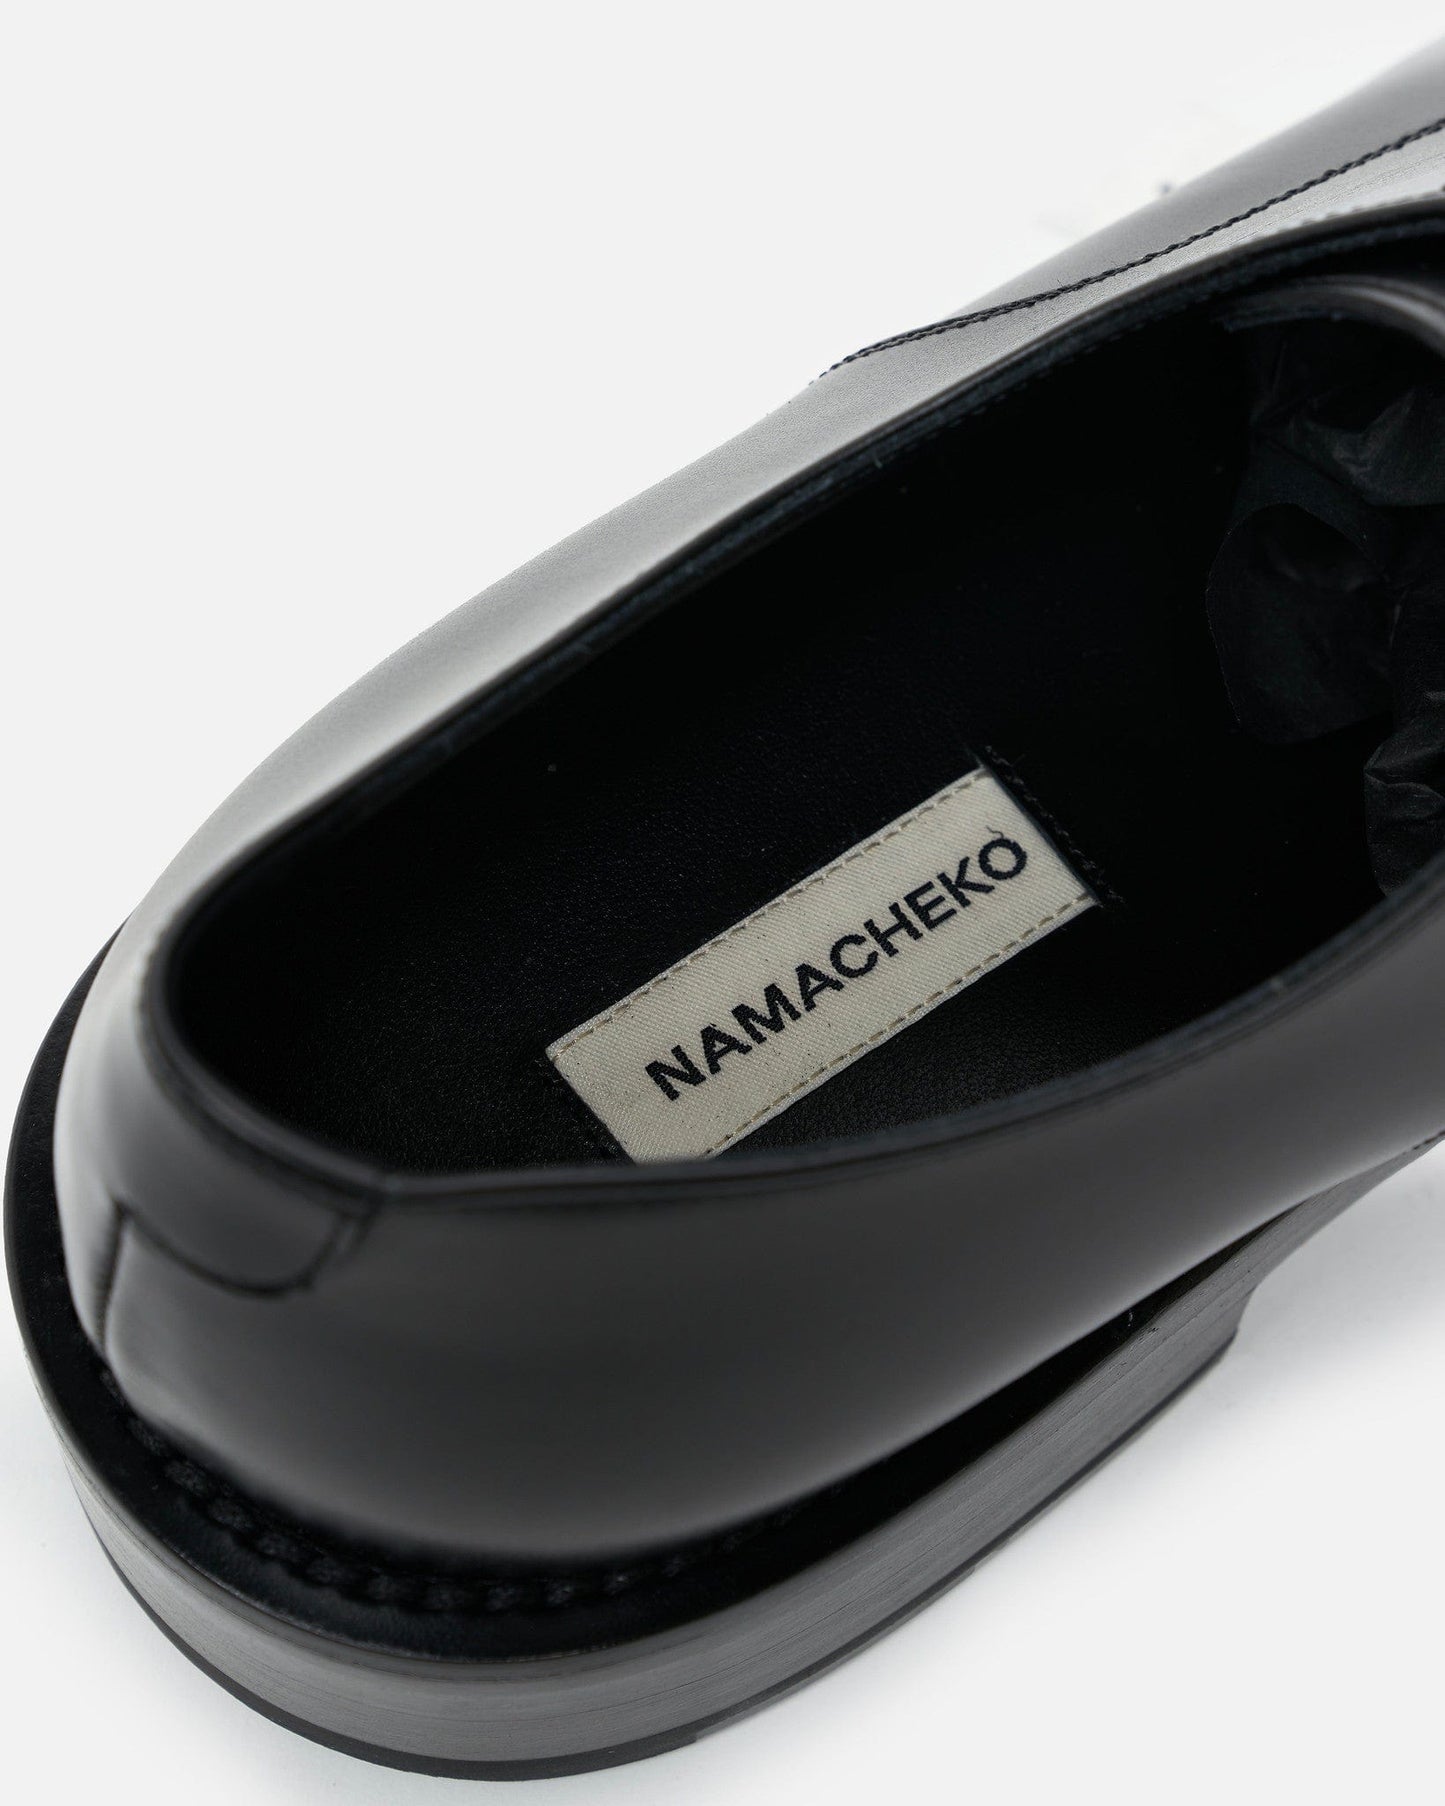 NAMACHEKO Men's Shoes Sweynthill Derby in Black/Box Calf